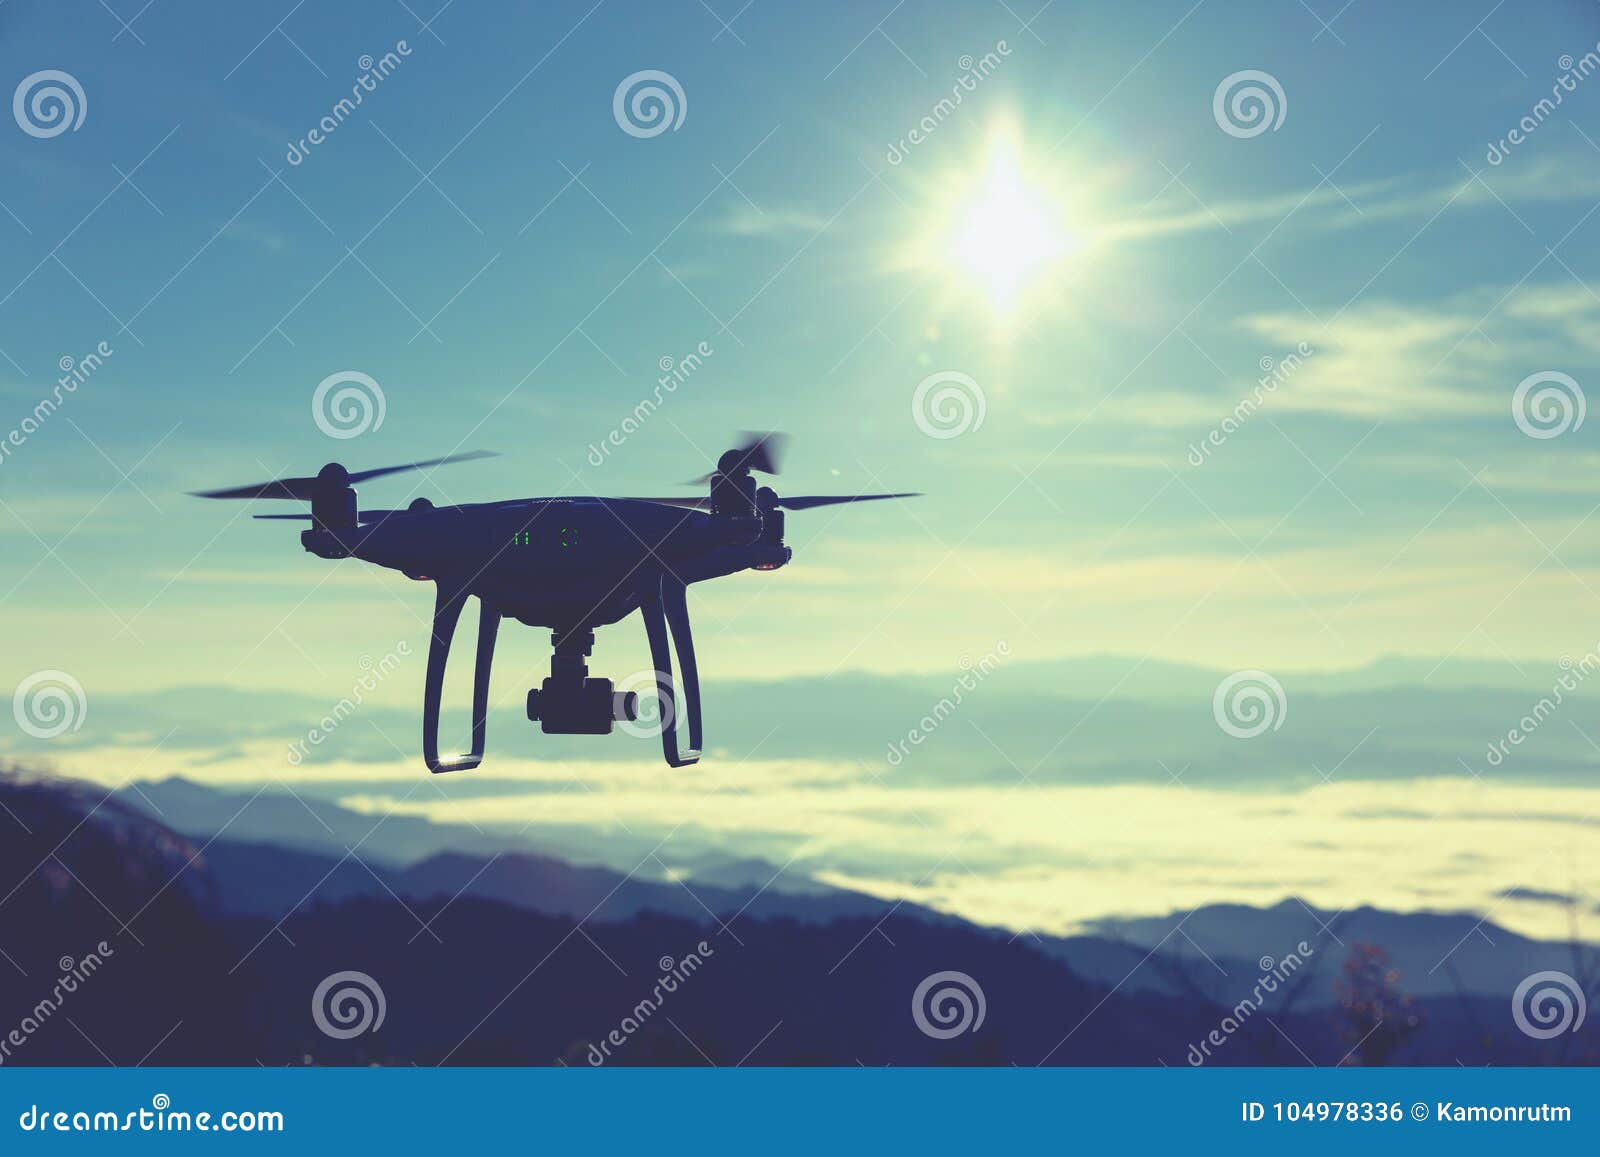 drone pilotage at sunrise.